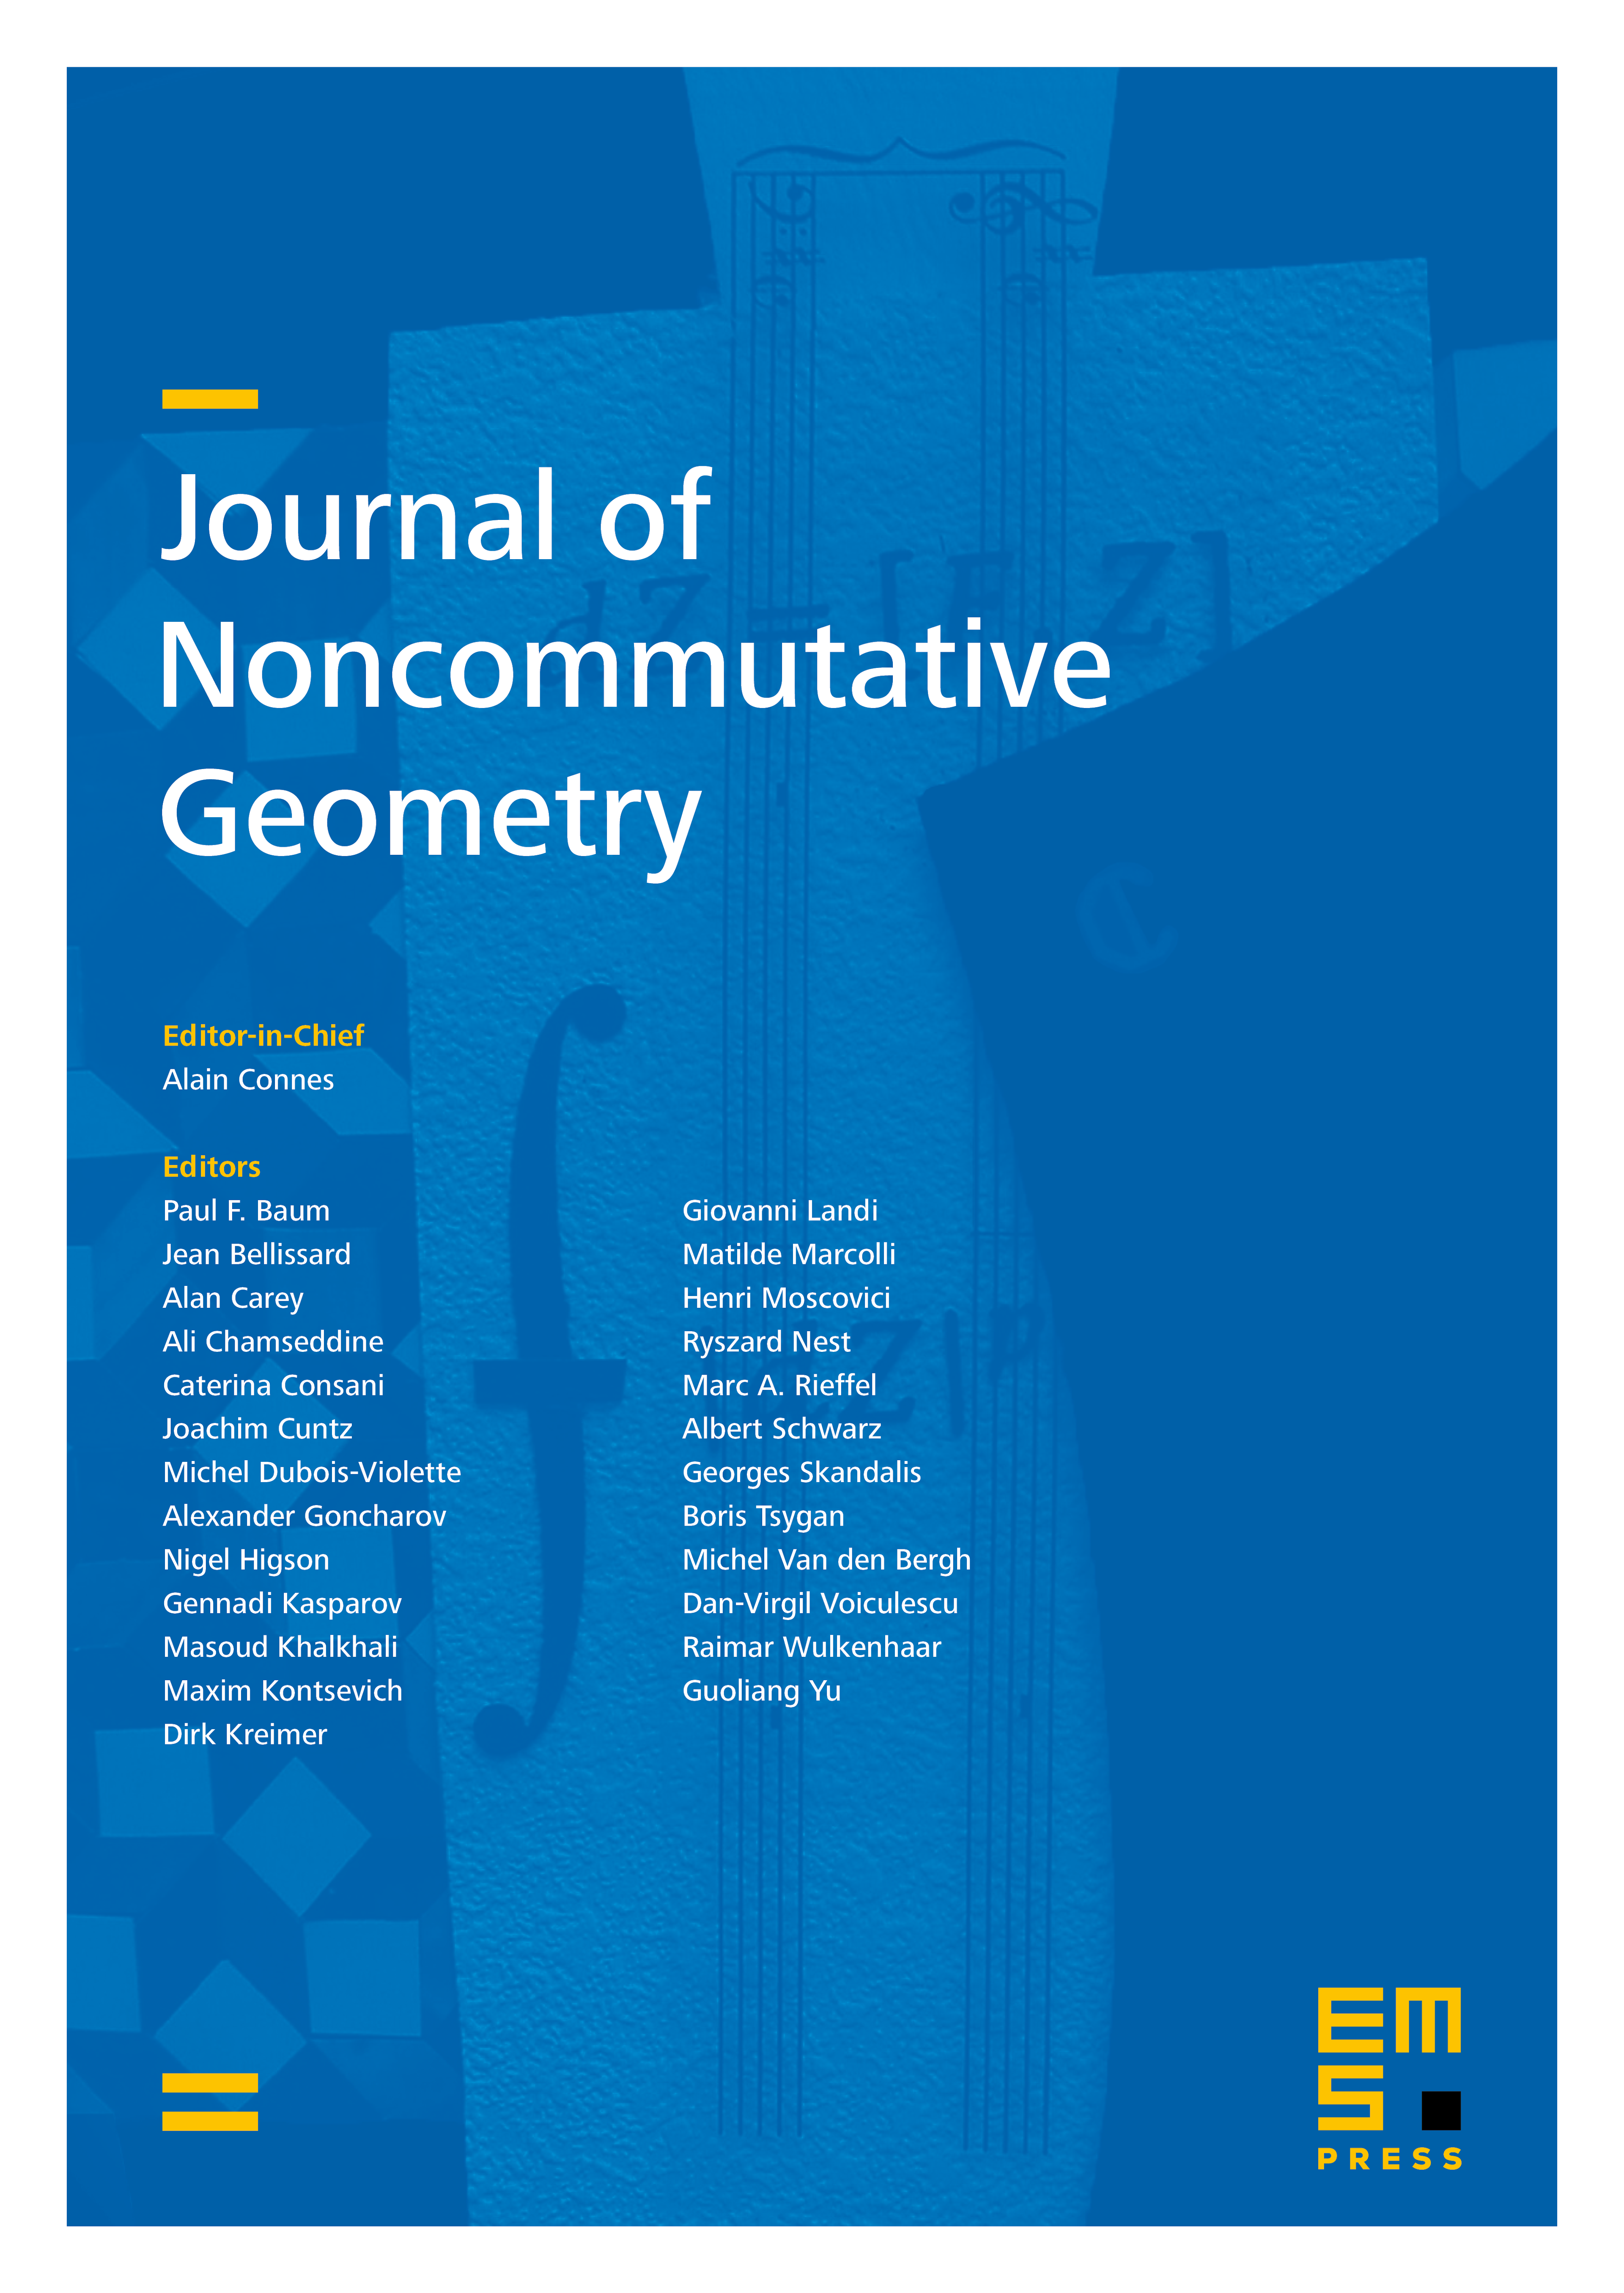 Poisson cohomology, Koszul duality, and Batalin–Vilkovisky algebras cover